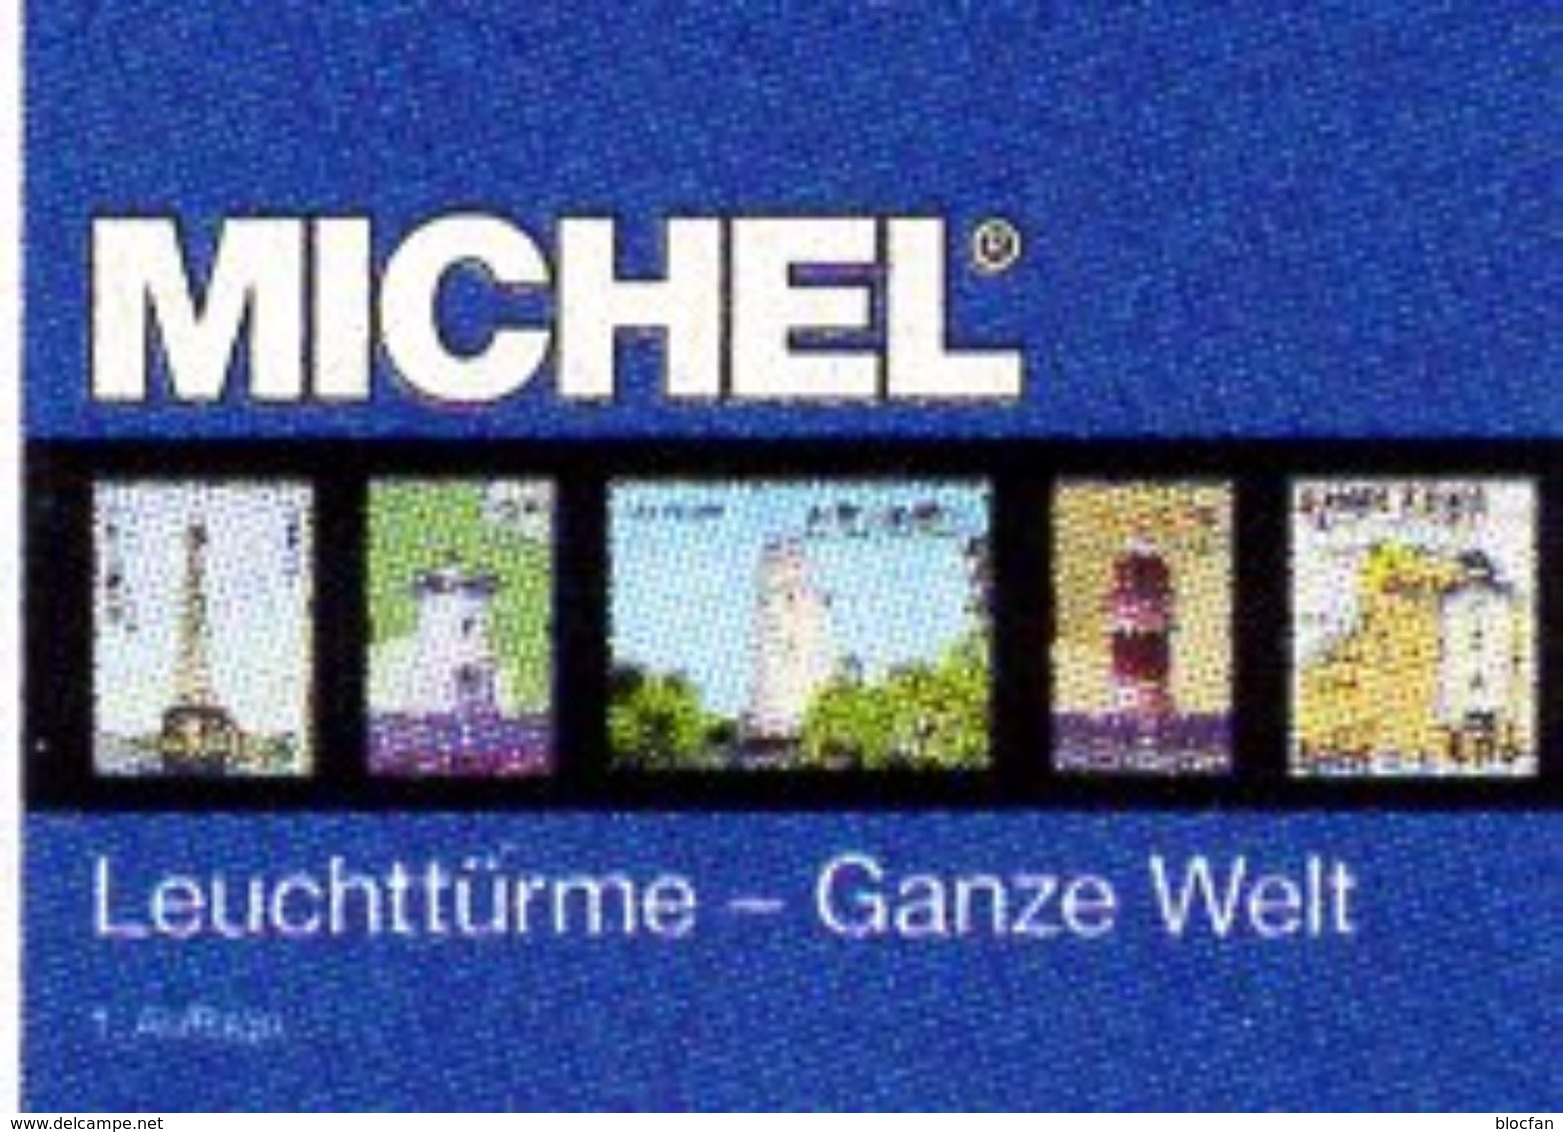 Motiv Leuchttürme 1.Auflage MICHEL 2017 neu 70€ topic stamps catalogue lighthous of the world ISBN978-3-95402-163-5